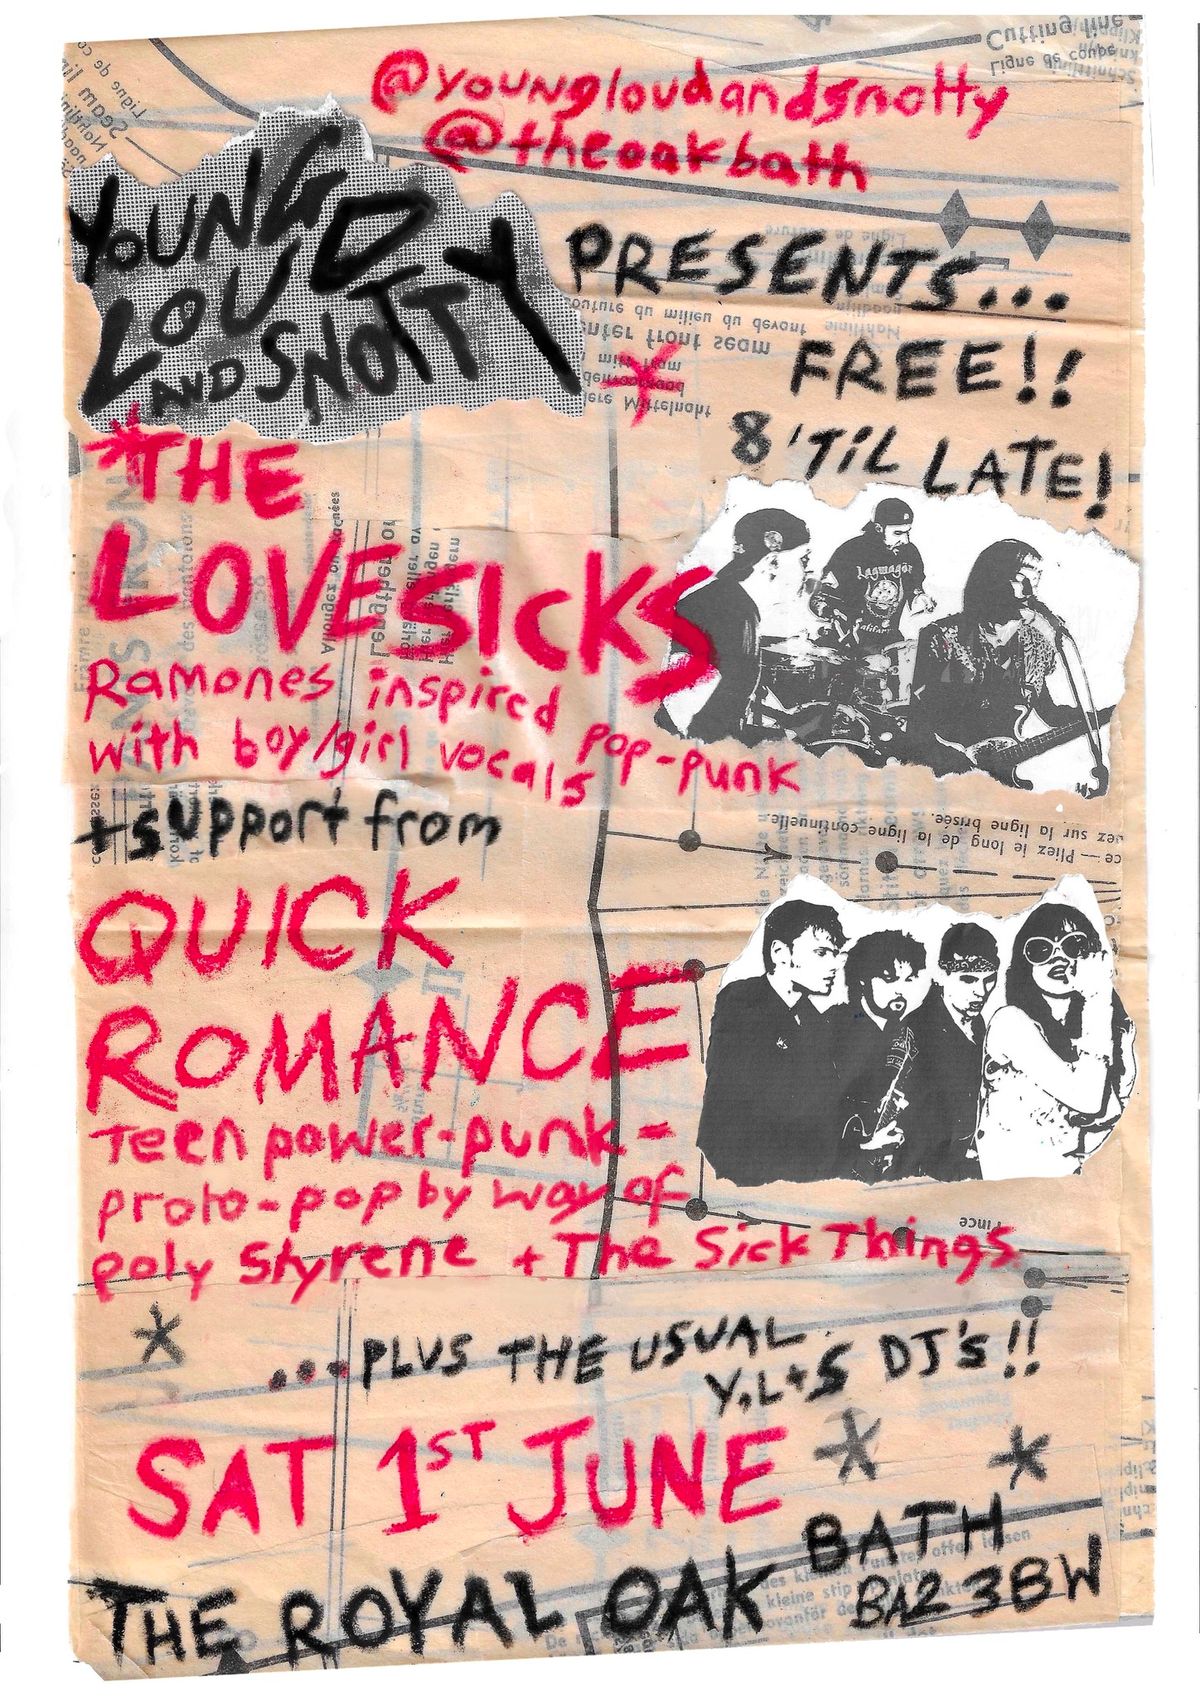 Lovesicks + Quick Romance play Young, Loud & Snotty on Sat 1st June at Royal Oak, Bath